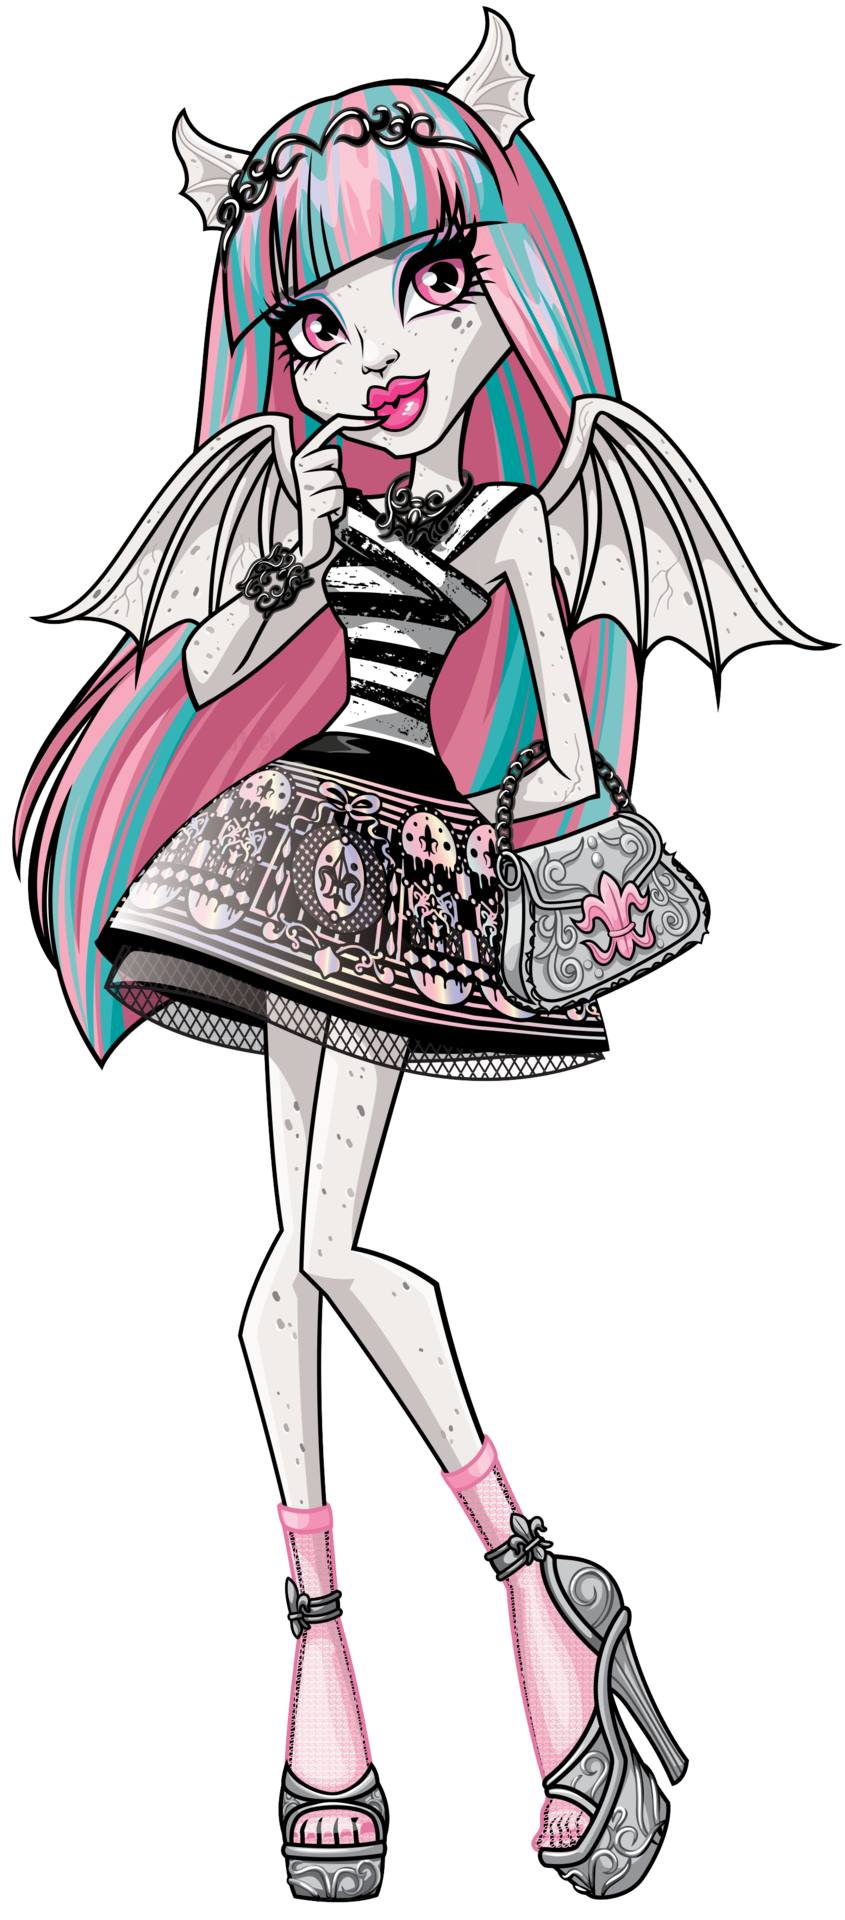 Monster High - Wikipedia